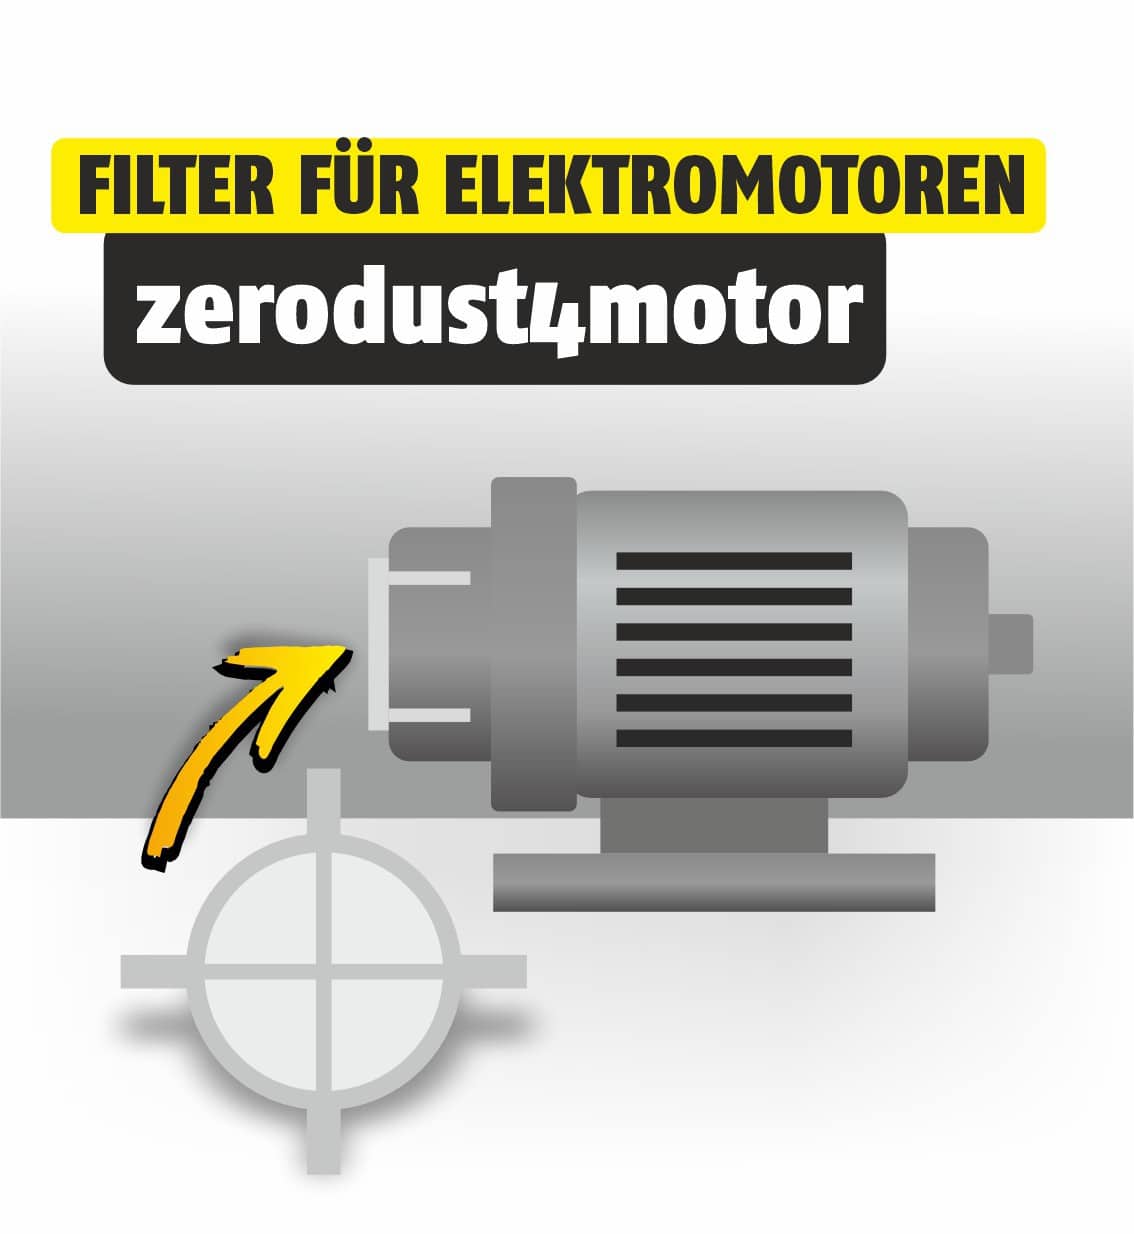 zerodust4motor®  Halter + Filter im Set